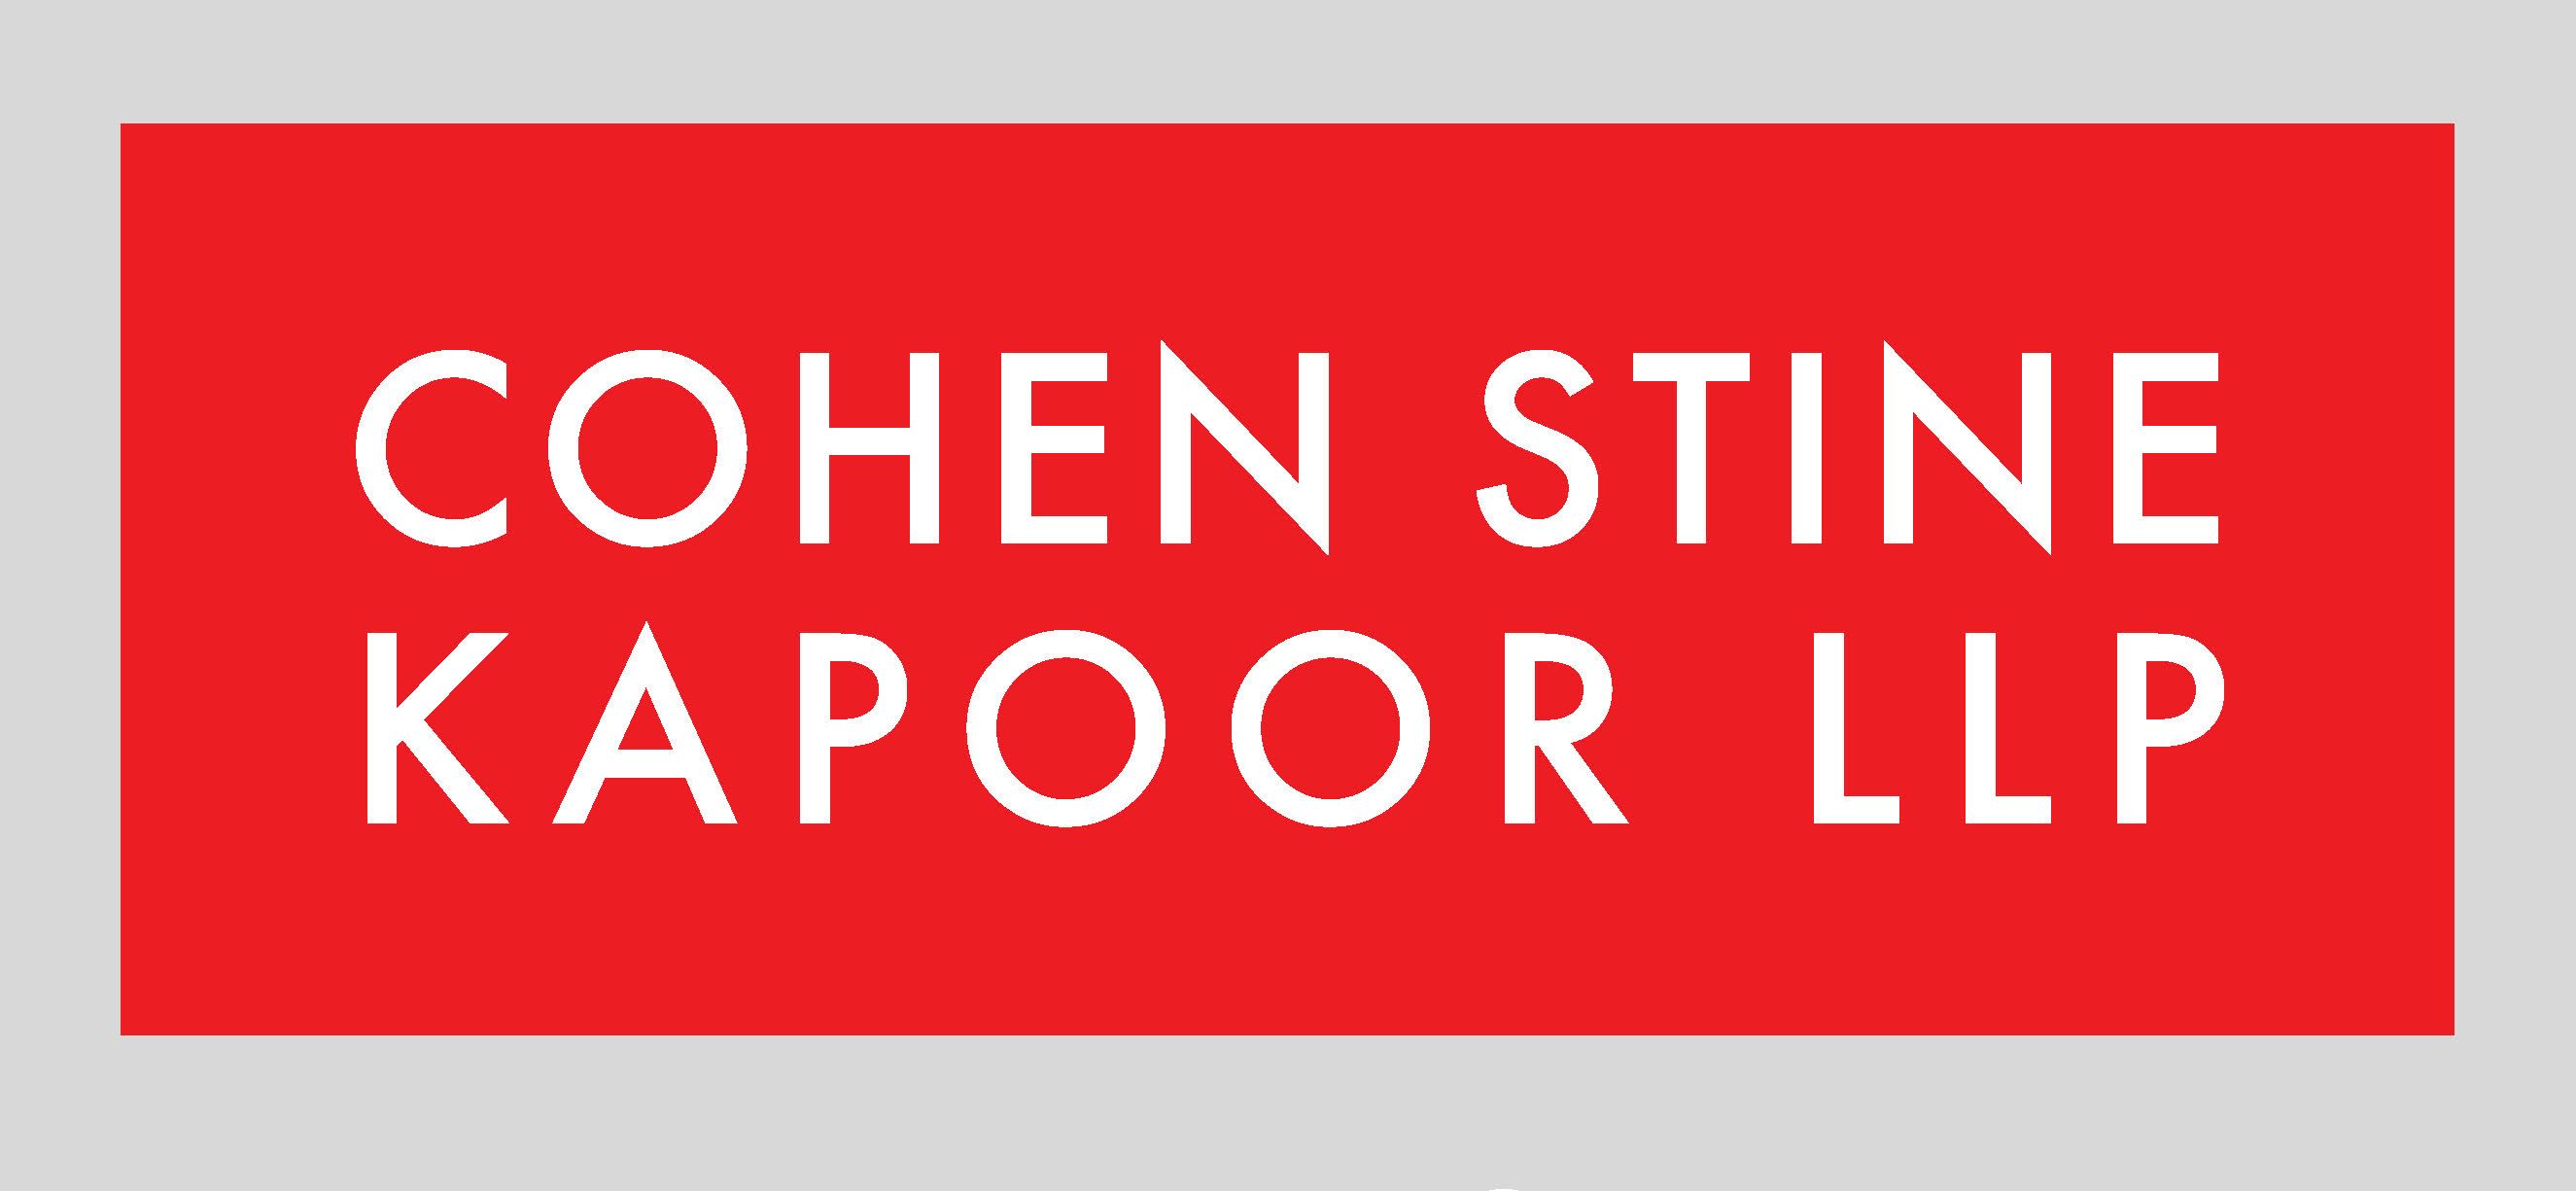 Cohen Stine Kapoor LLP law firm logo